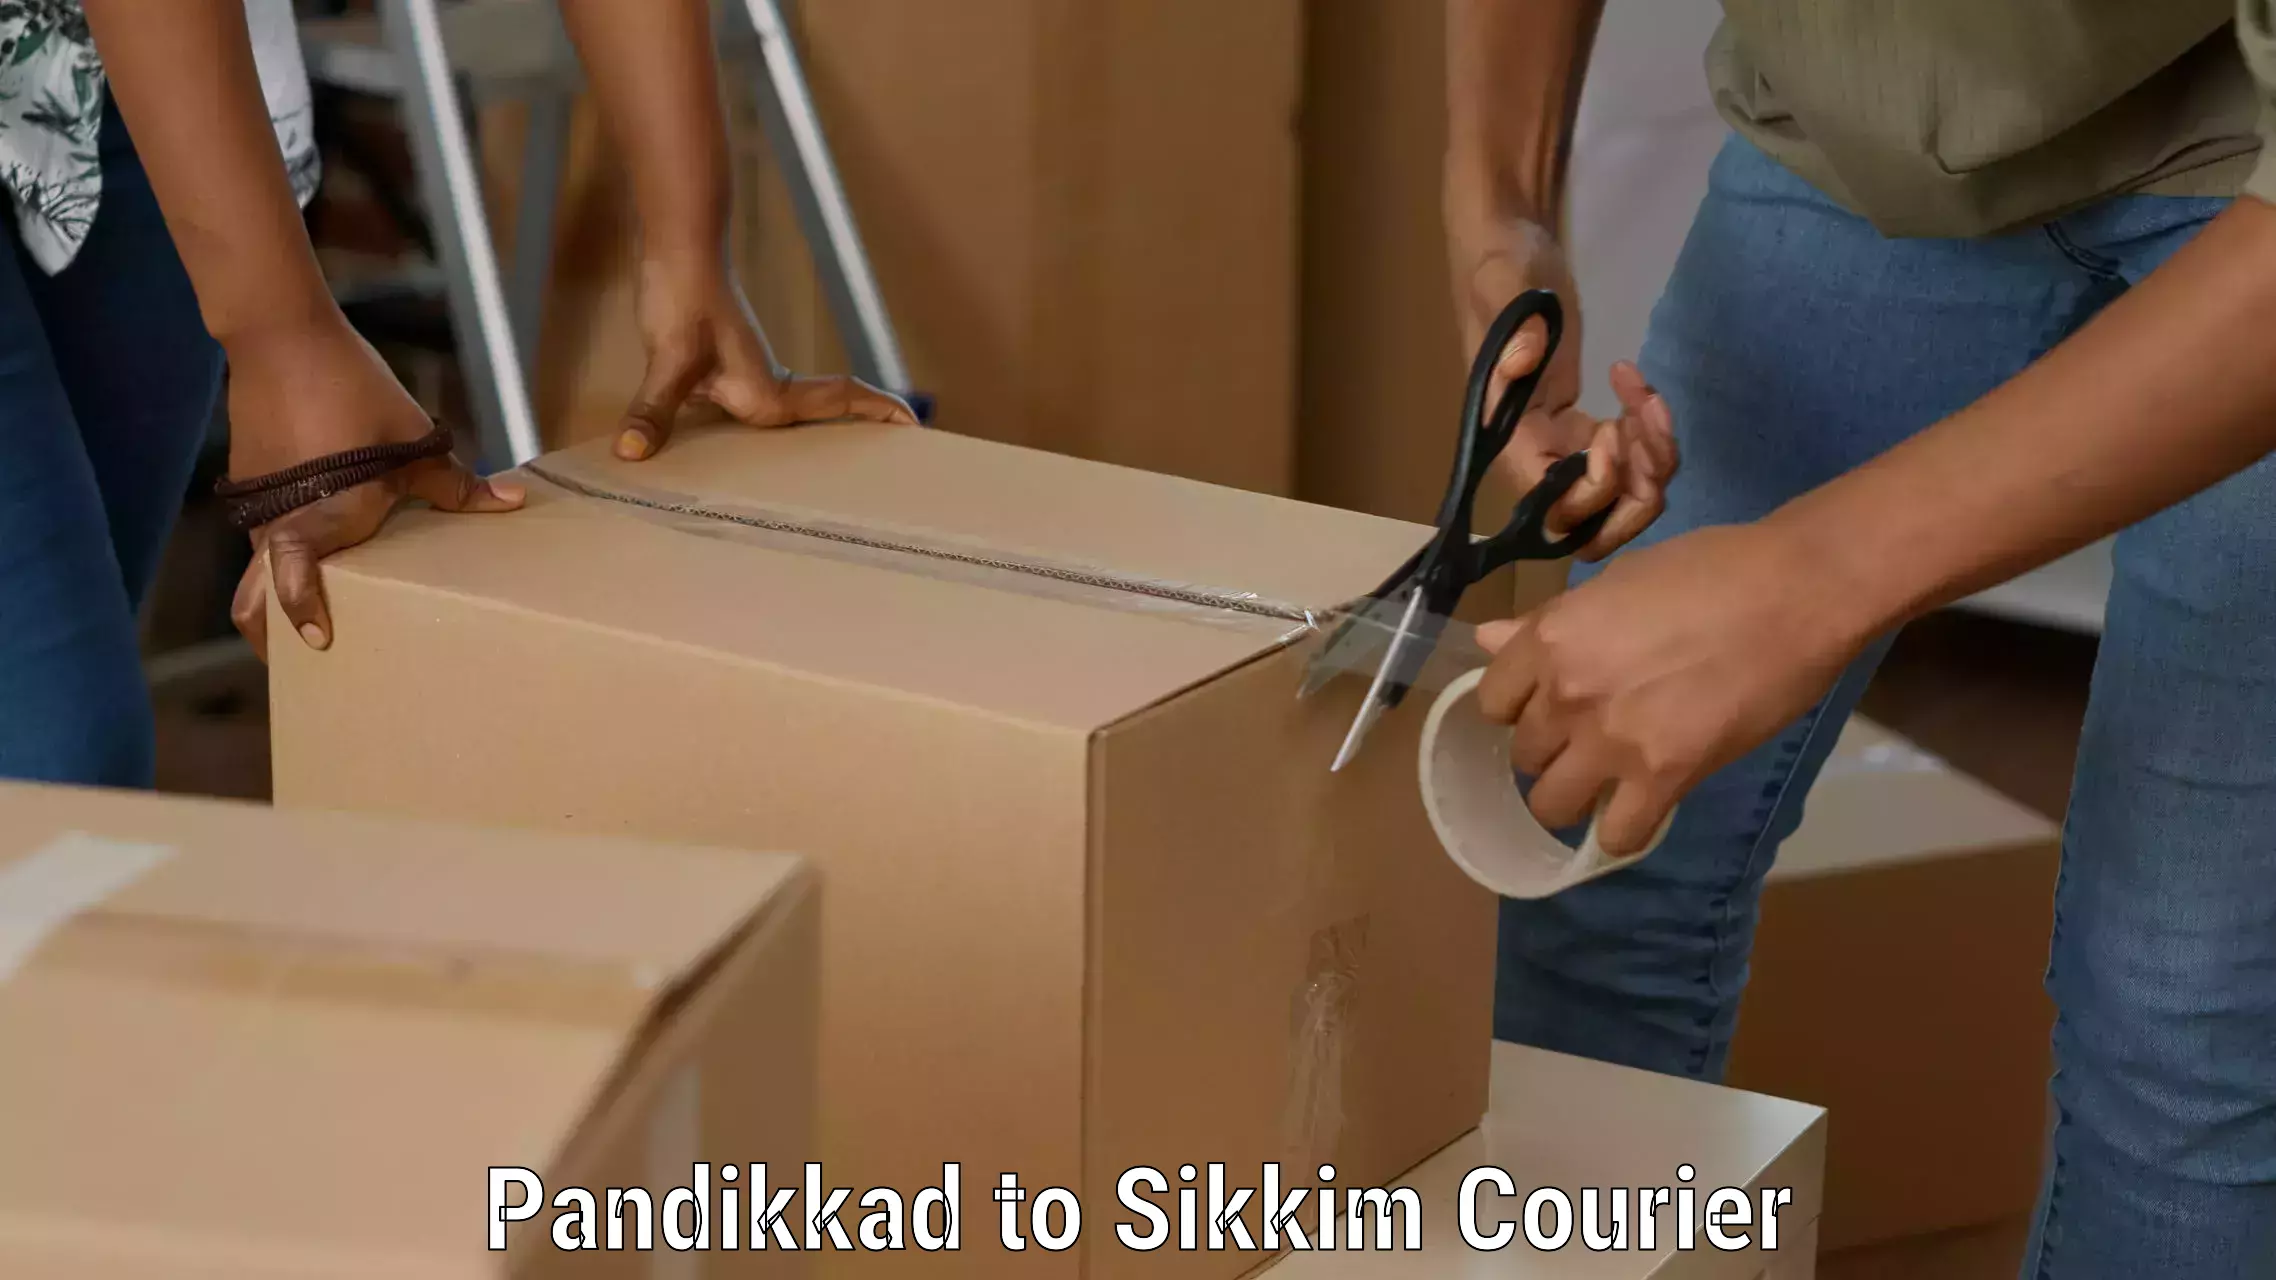 Quick dispatch service Pandikkad to Sikkim